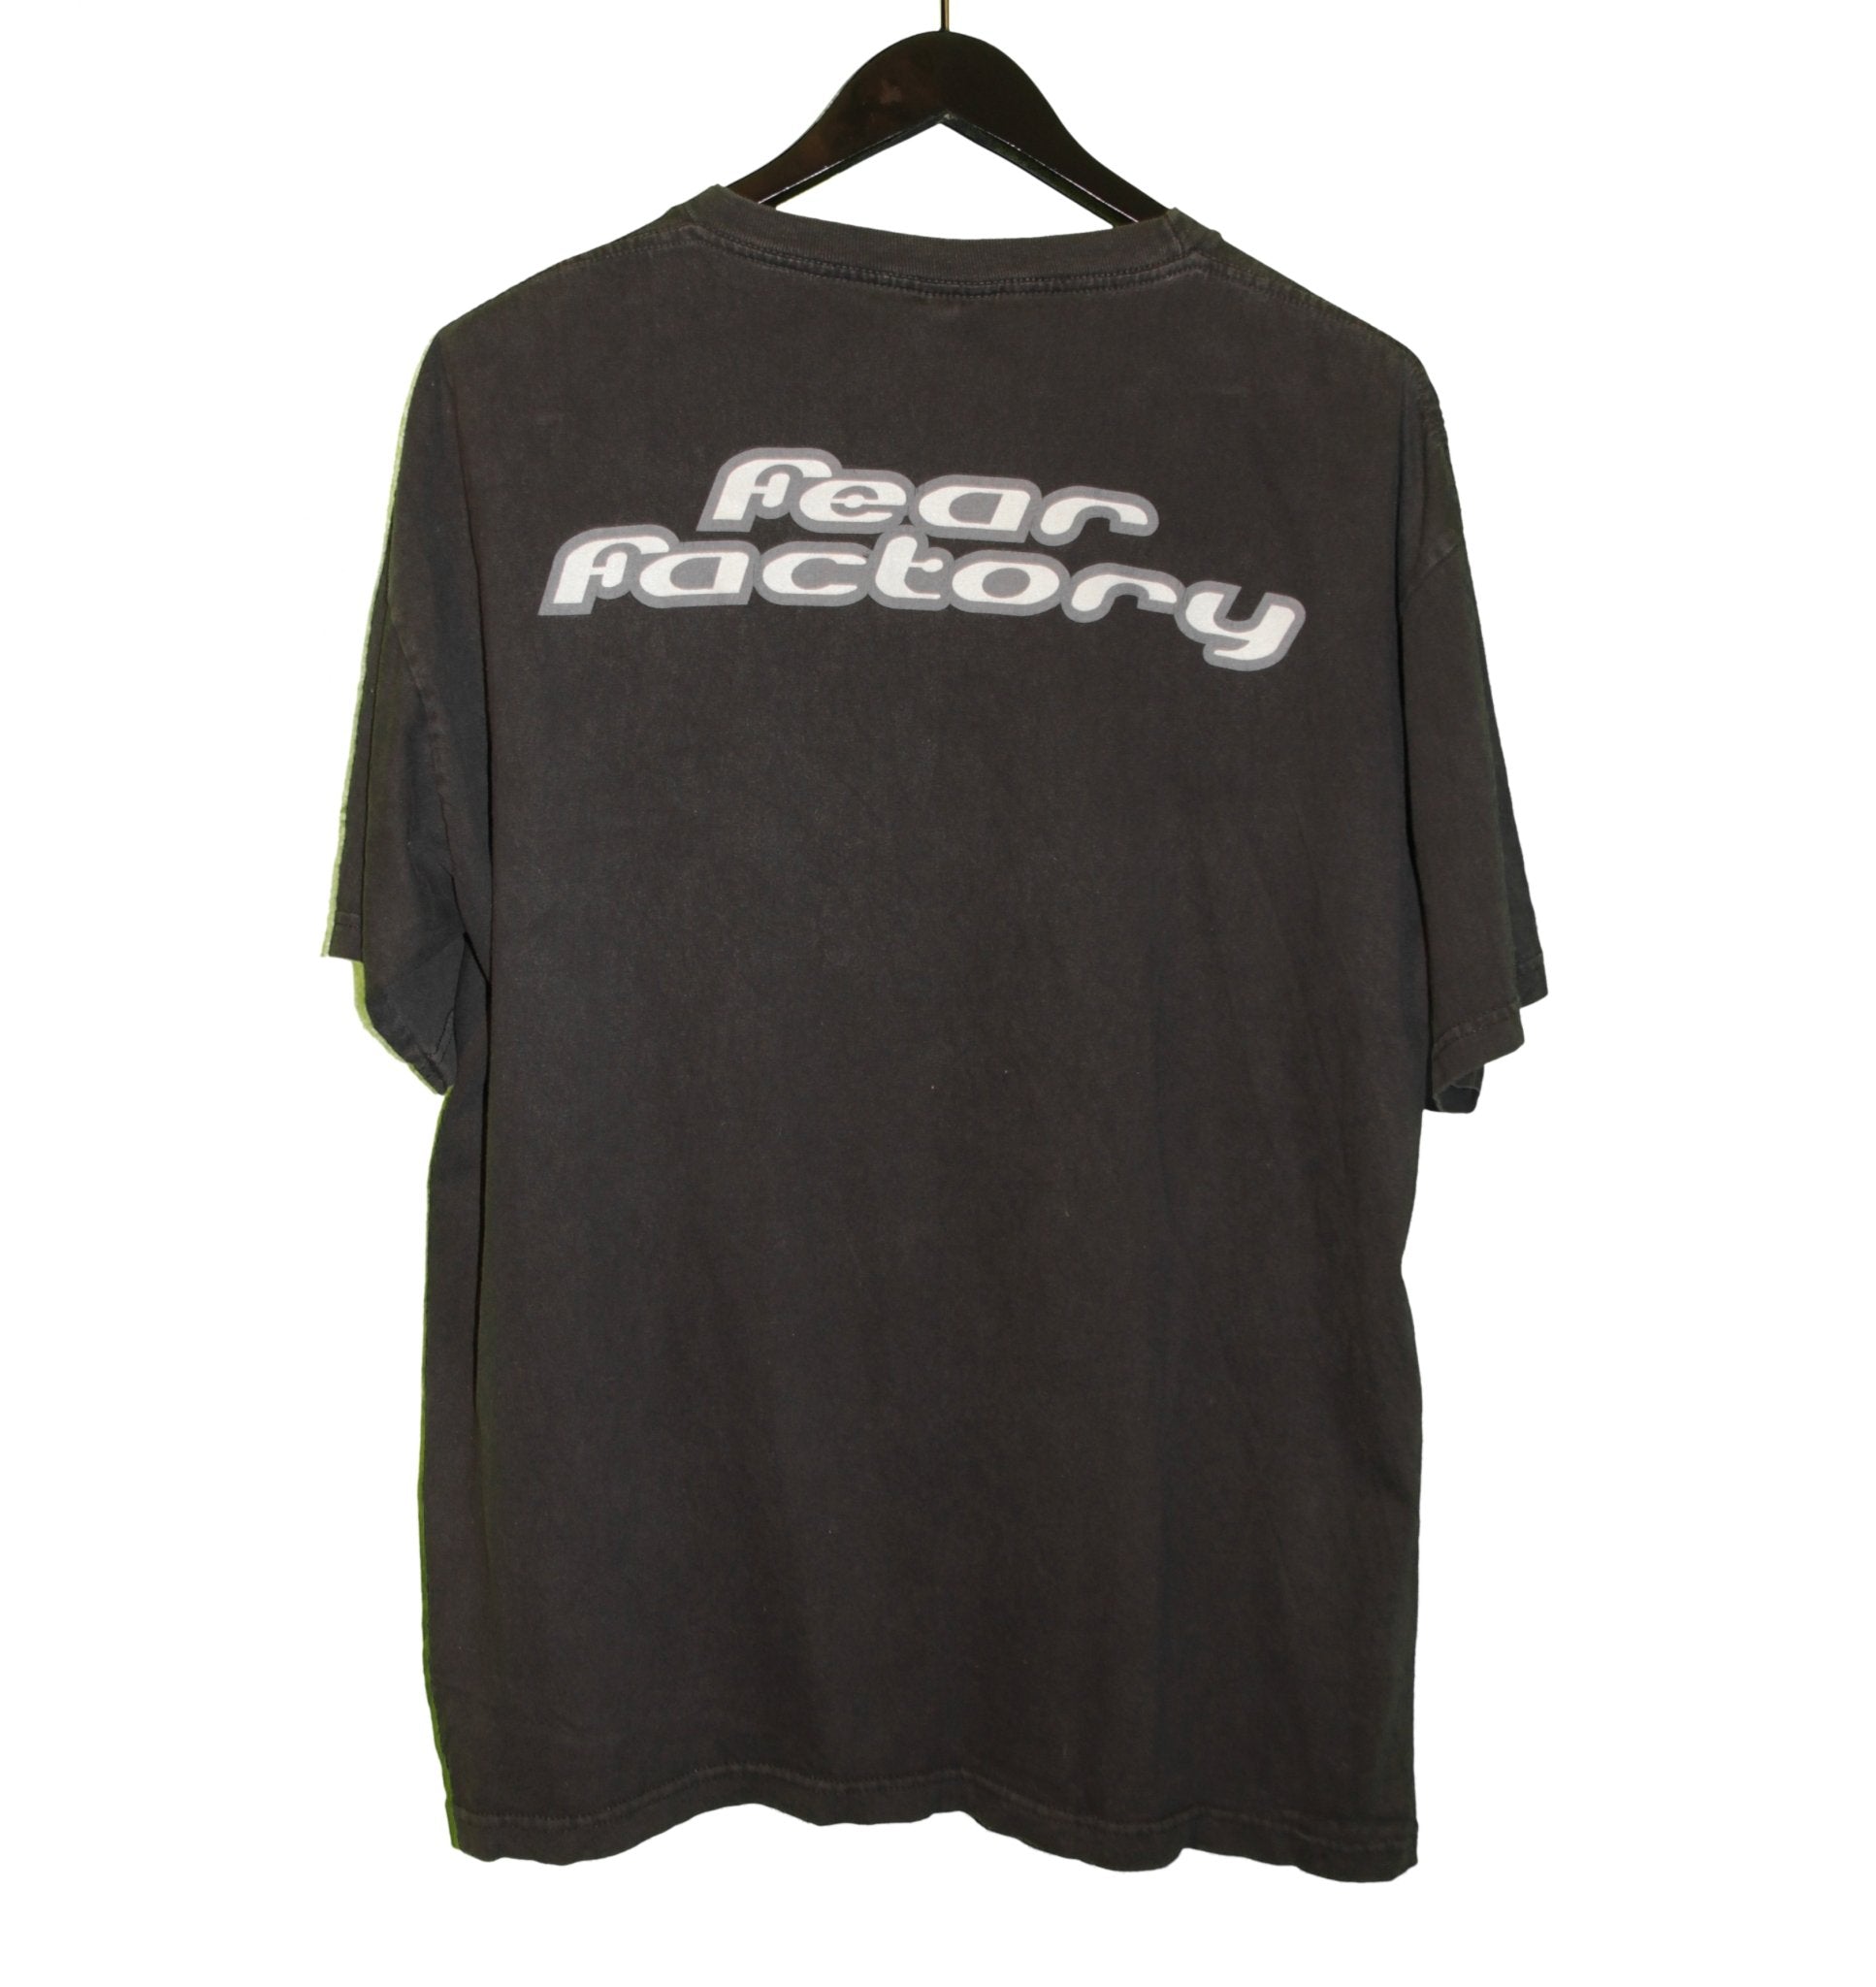 Fear Factory 1999 Obsolete Tour Shirt - Faded AU